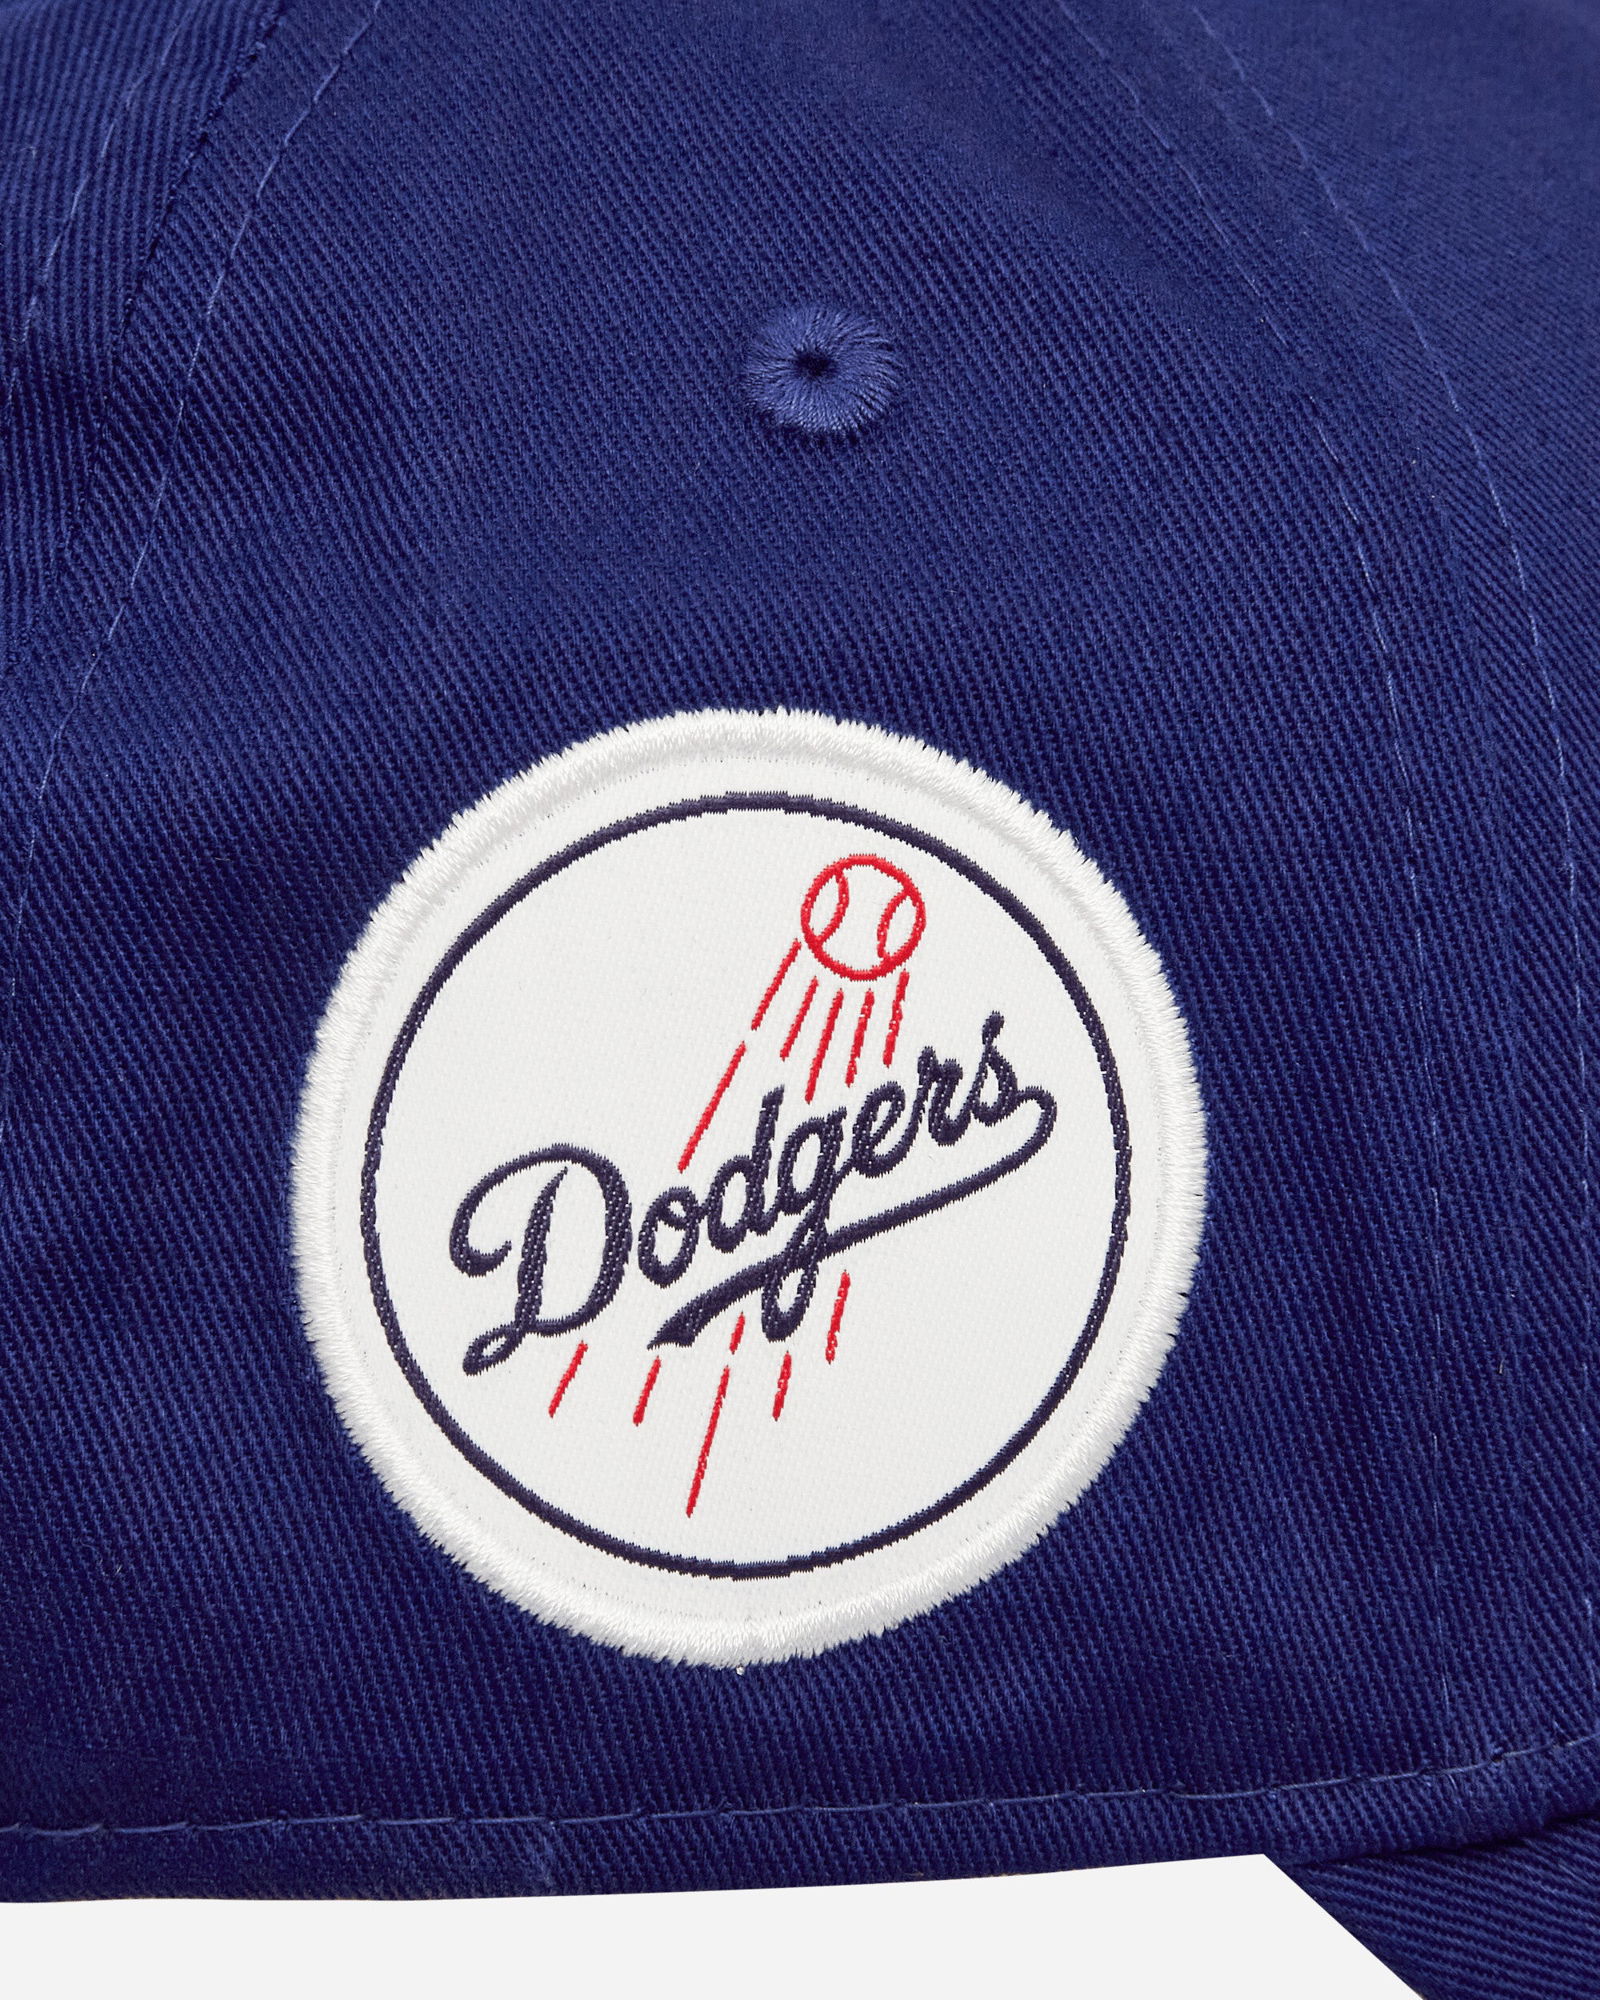 LA Dodgers Team Side Patch 9FORTY Adjustable Cap